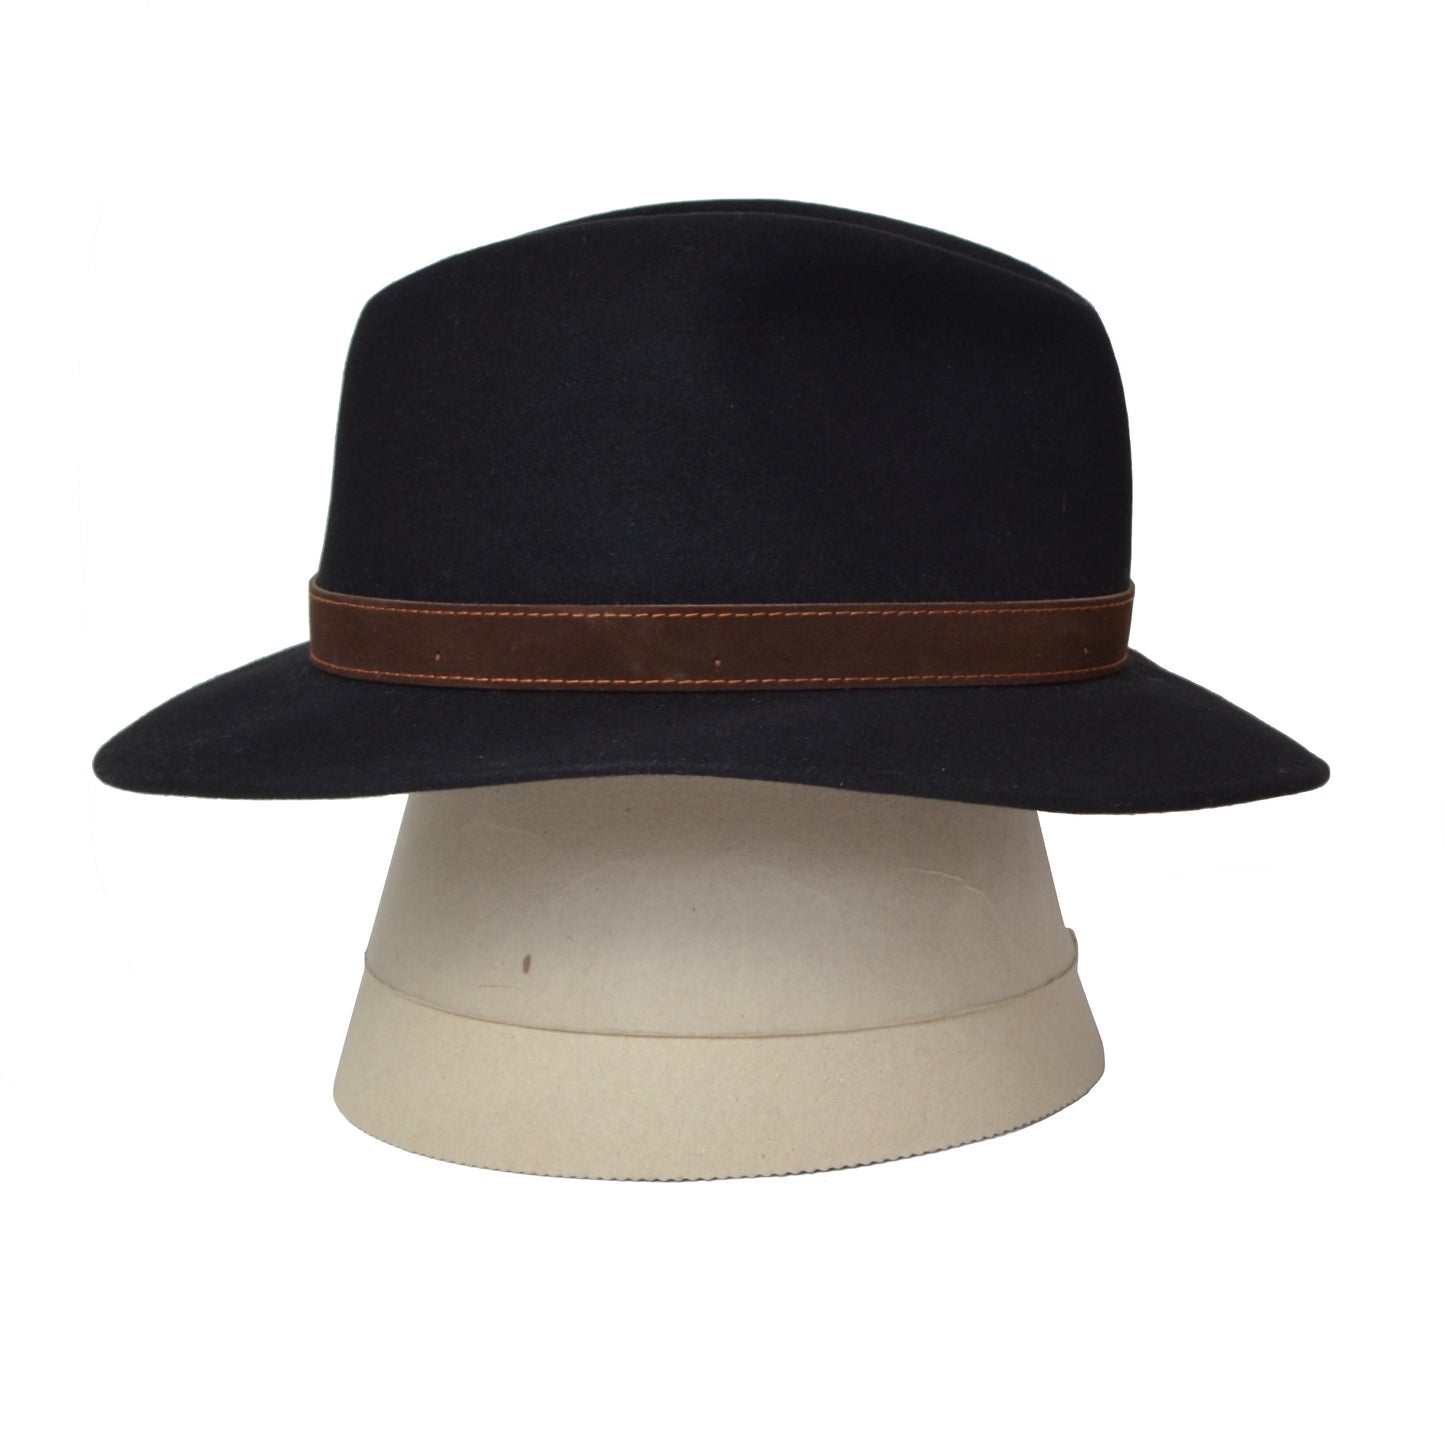 Borsalino Rainproof Line Fur Felt Hat Size 59 - Black